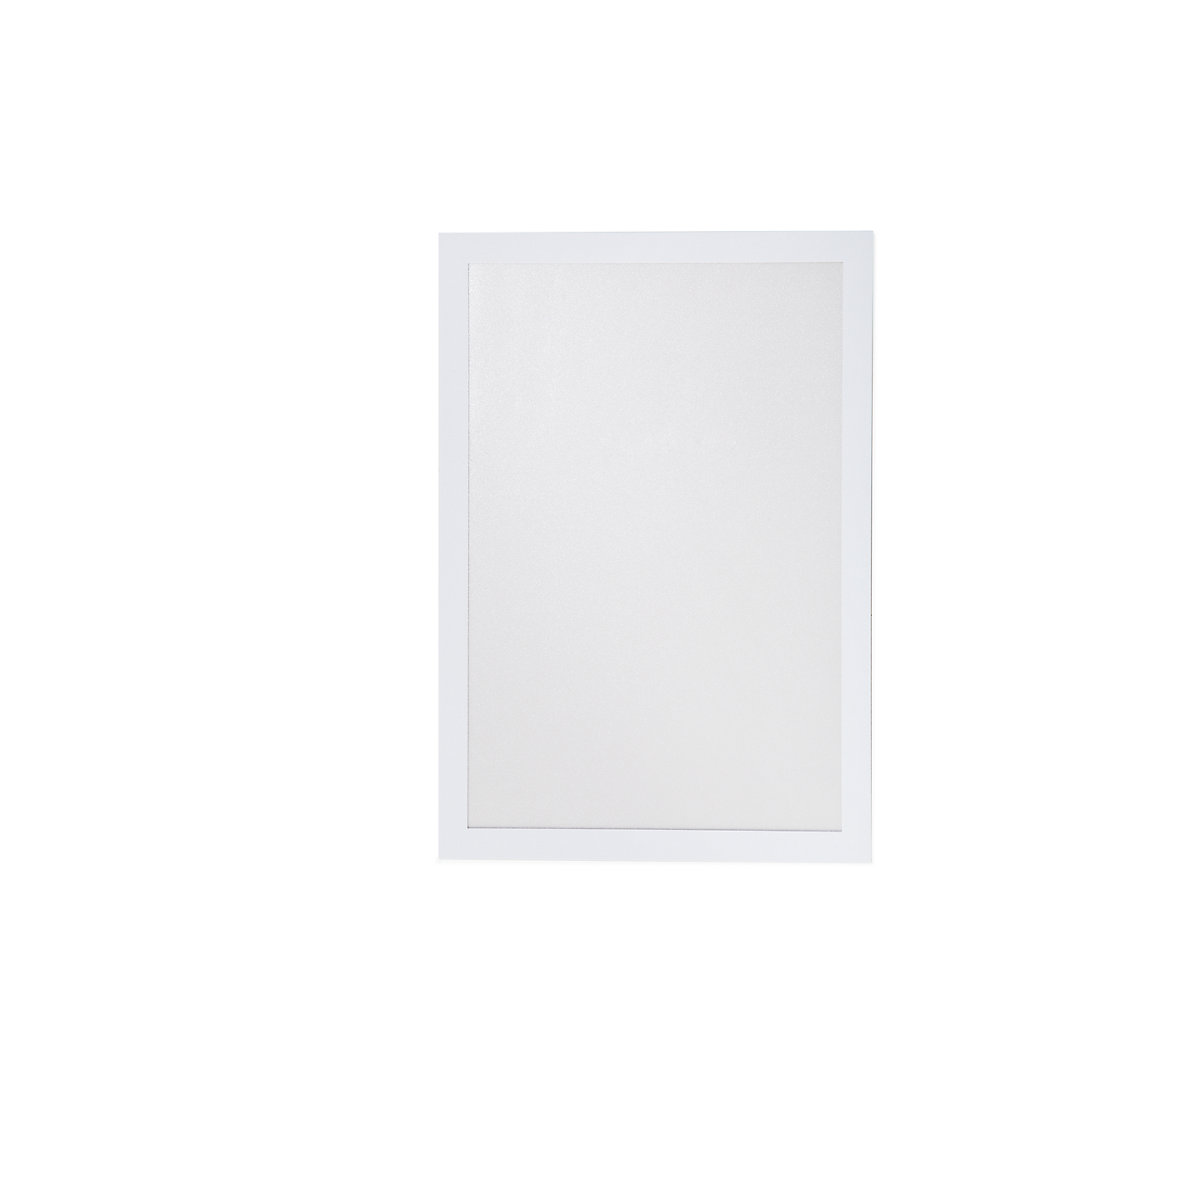 DURAFRAME® display frame – DURABLE